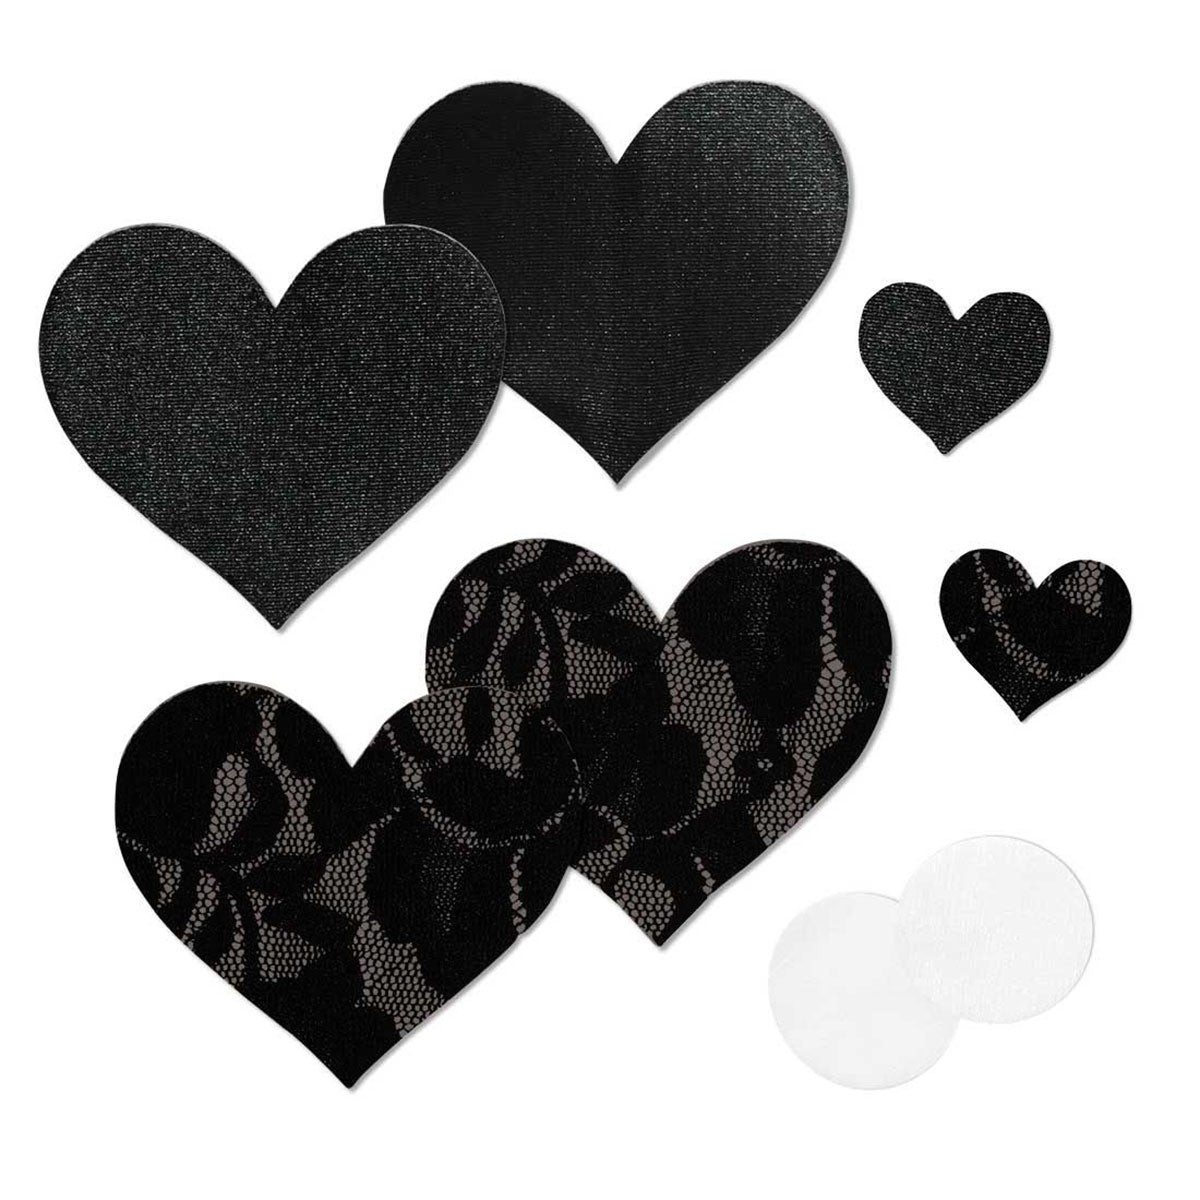 Nippies Basics Black Hearts - Size C